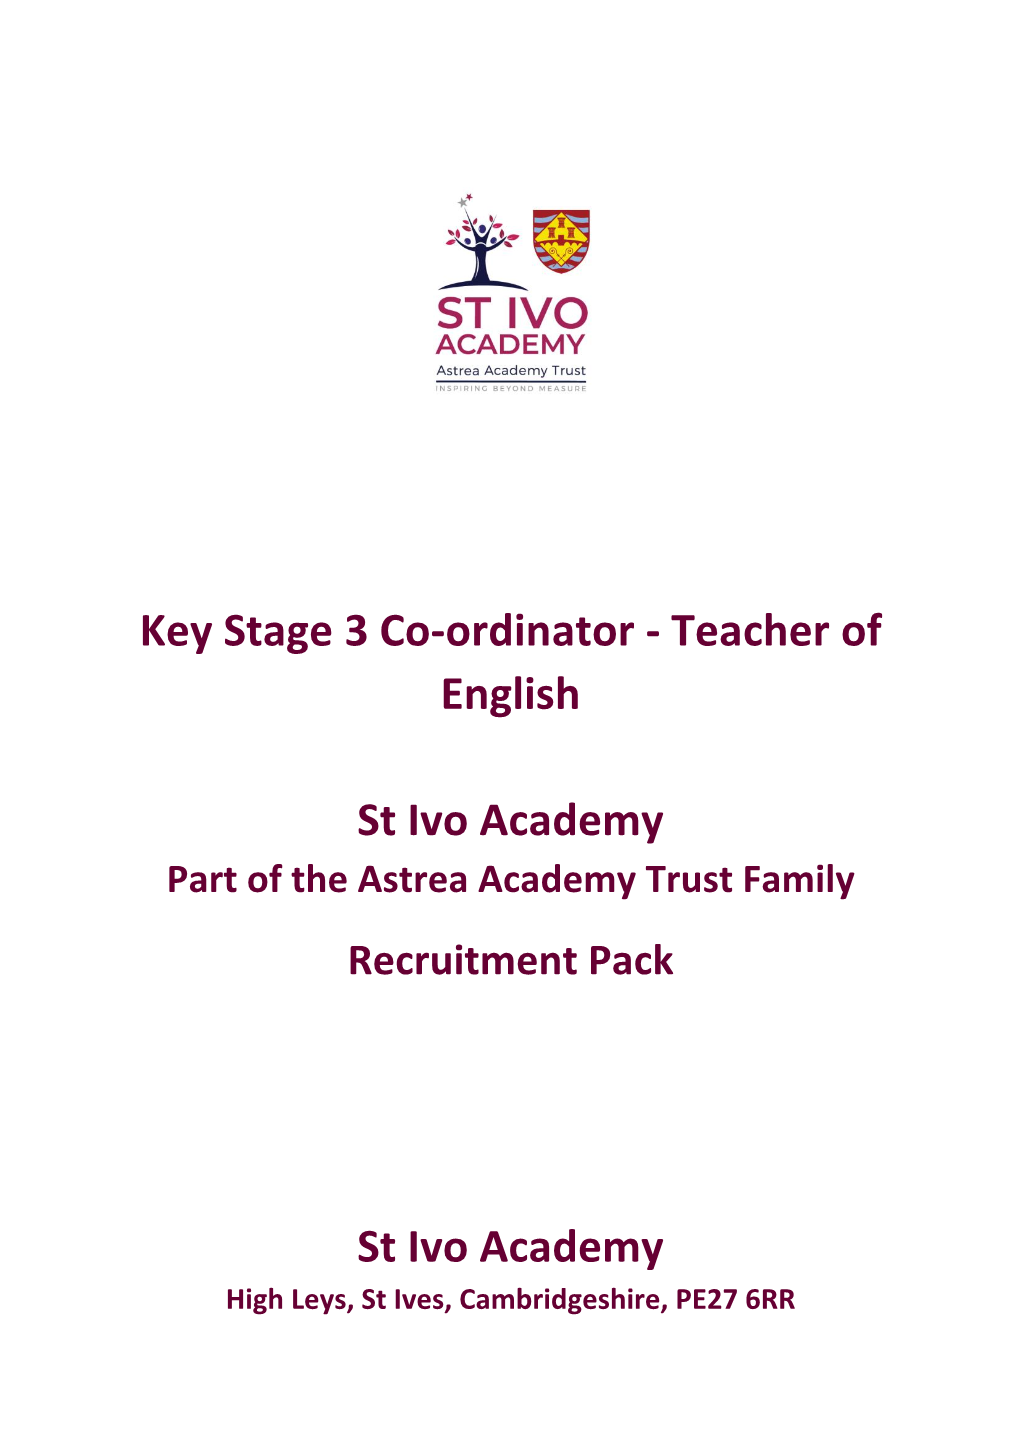 Key Stage 3 Co-Ordinator - Teacher of English